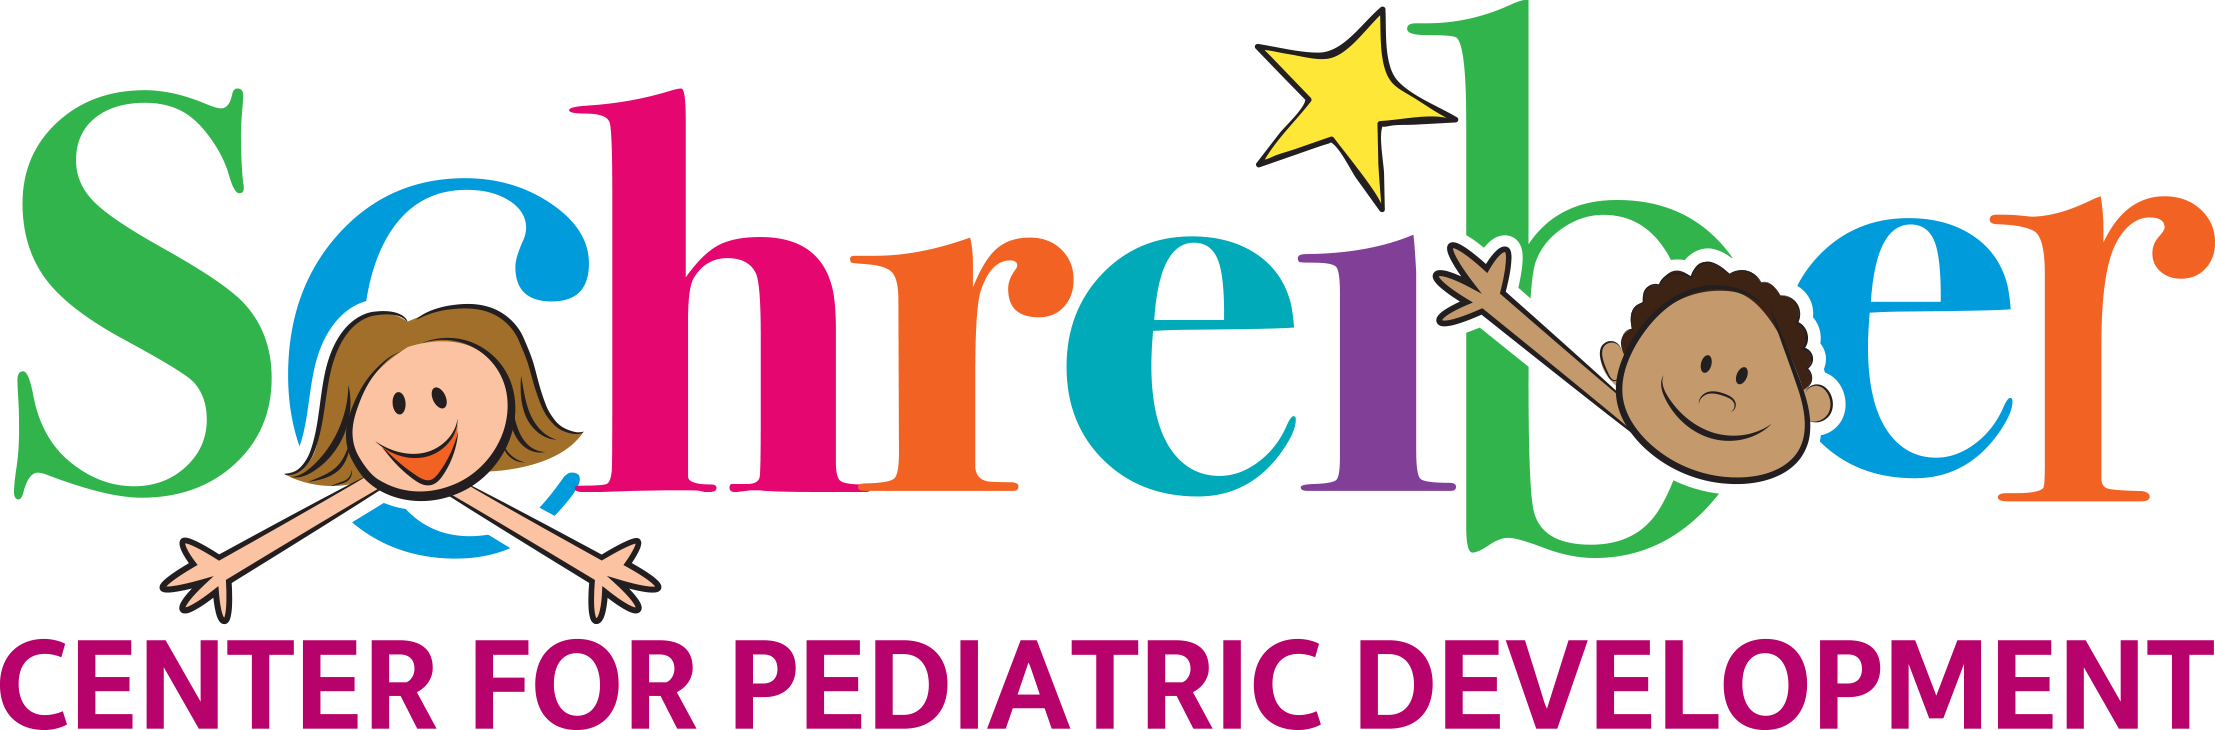 Schreiber Center for Pediatric Development